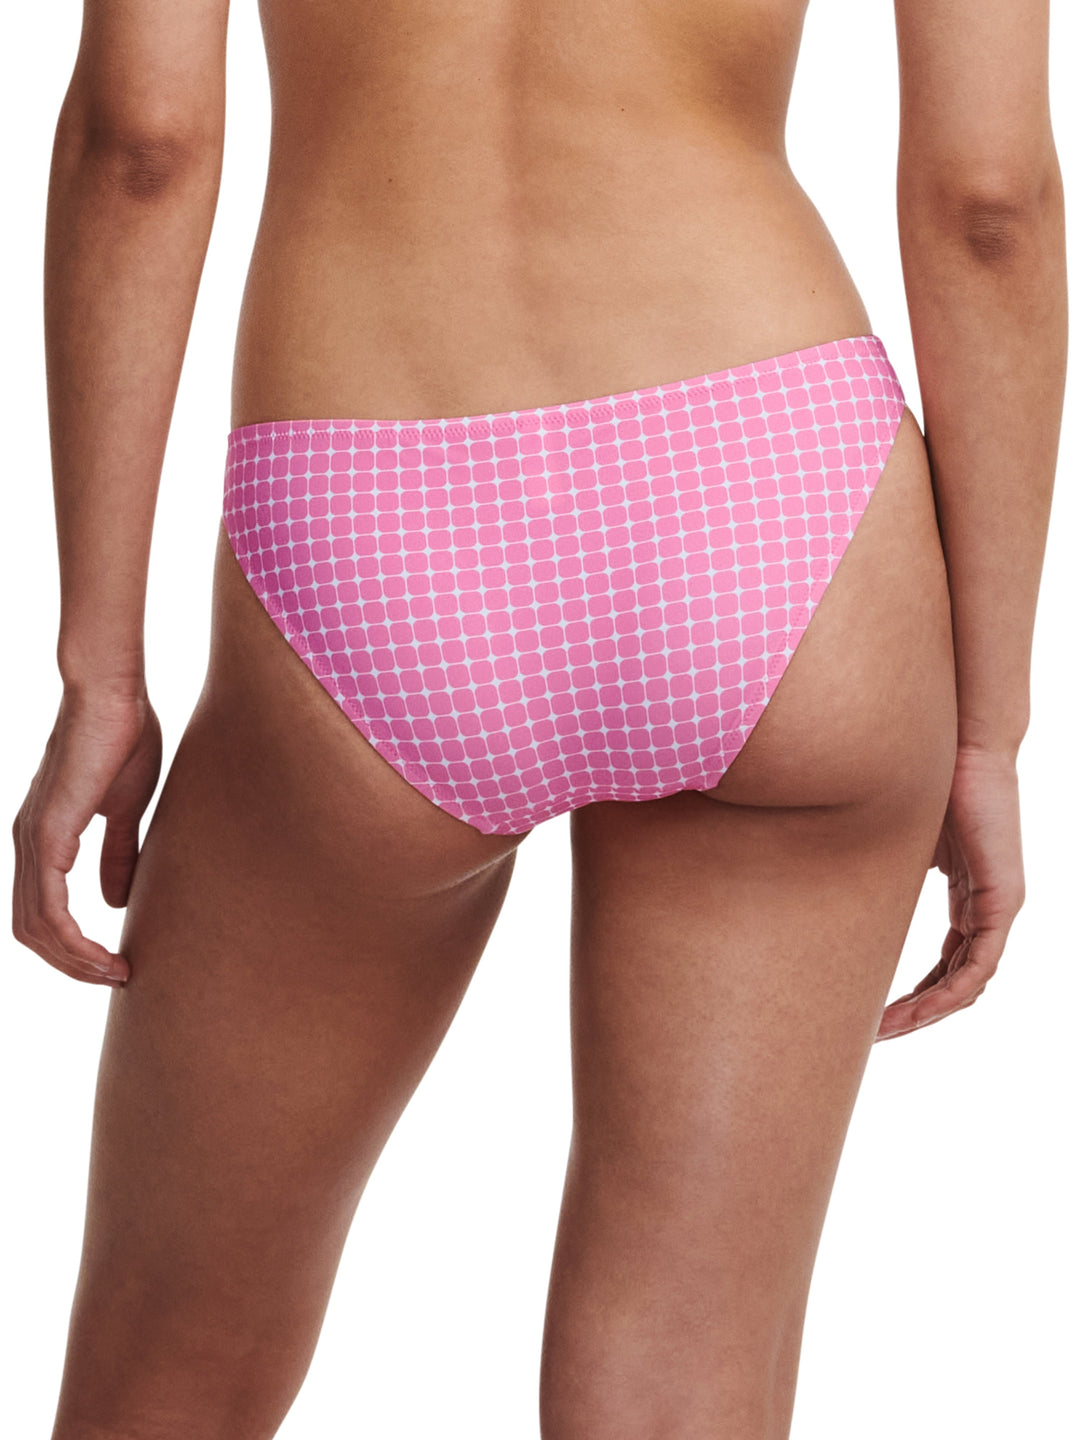 Passionata 泳裝 Jaia 比基尼三角褲 - 粉紅色圓點比基尼三角褲 Passionata